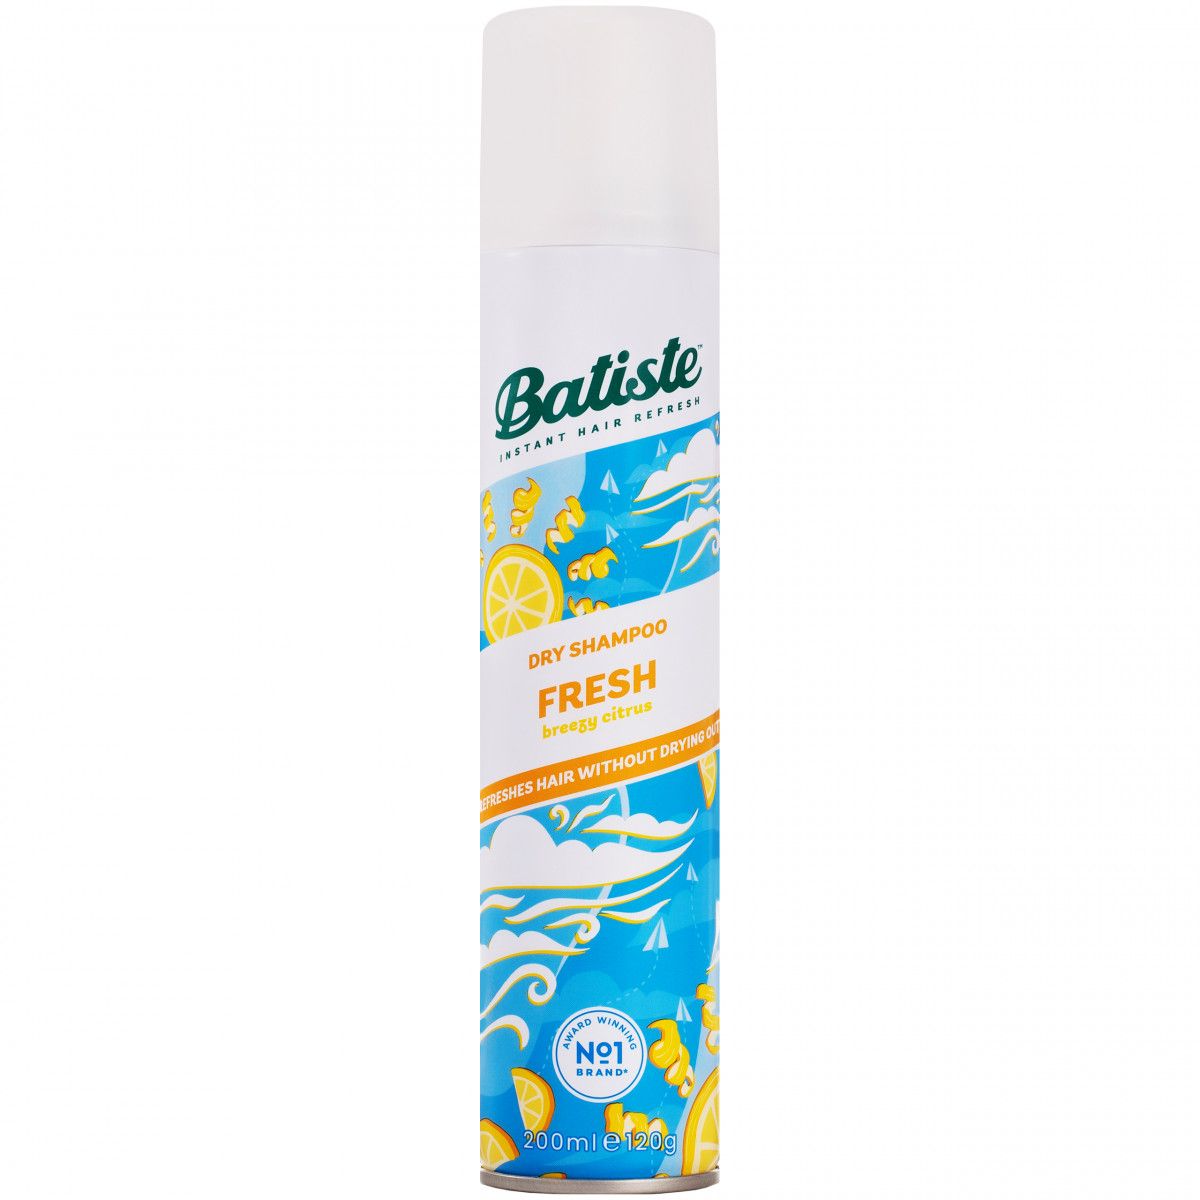 batiste naughty suchy szampon